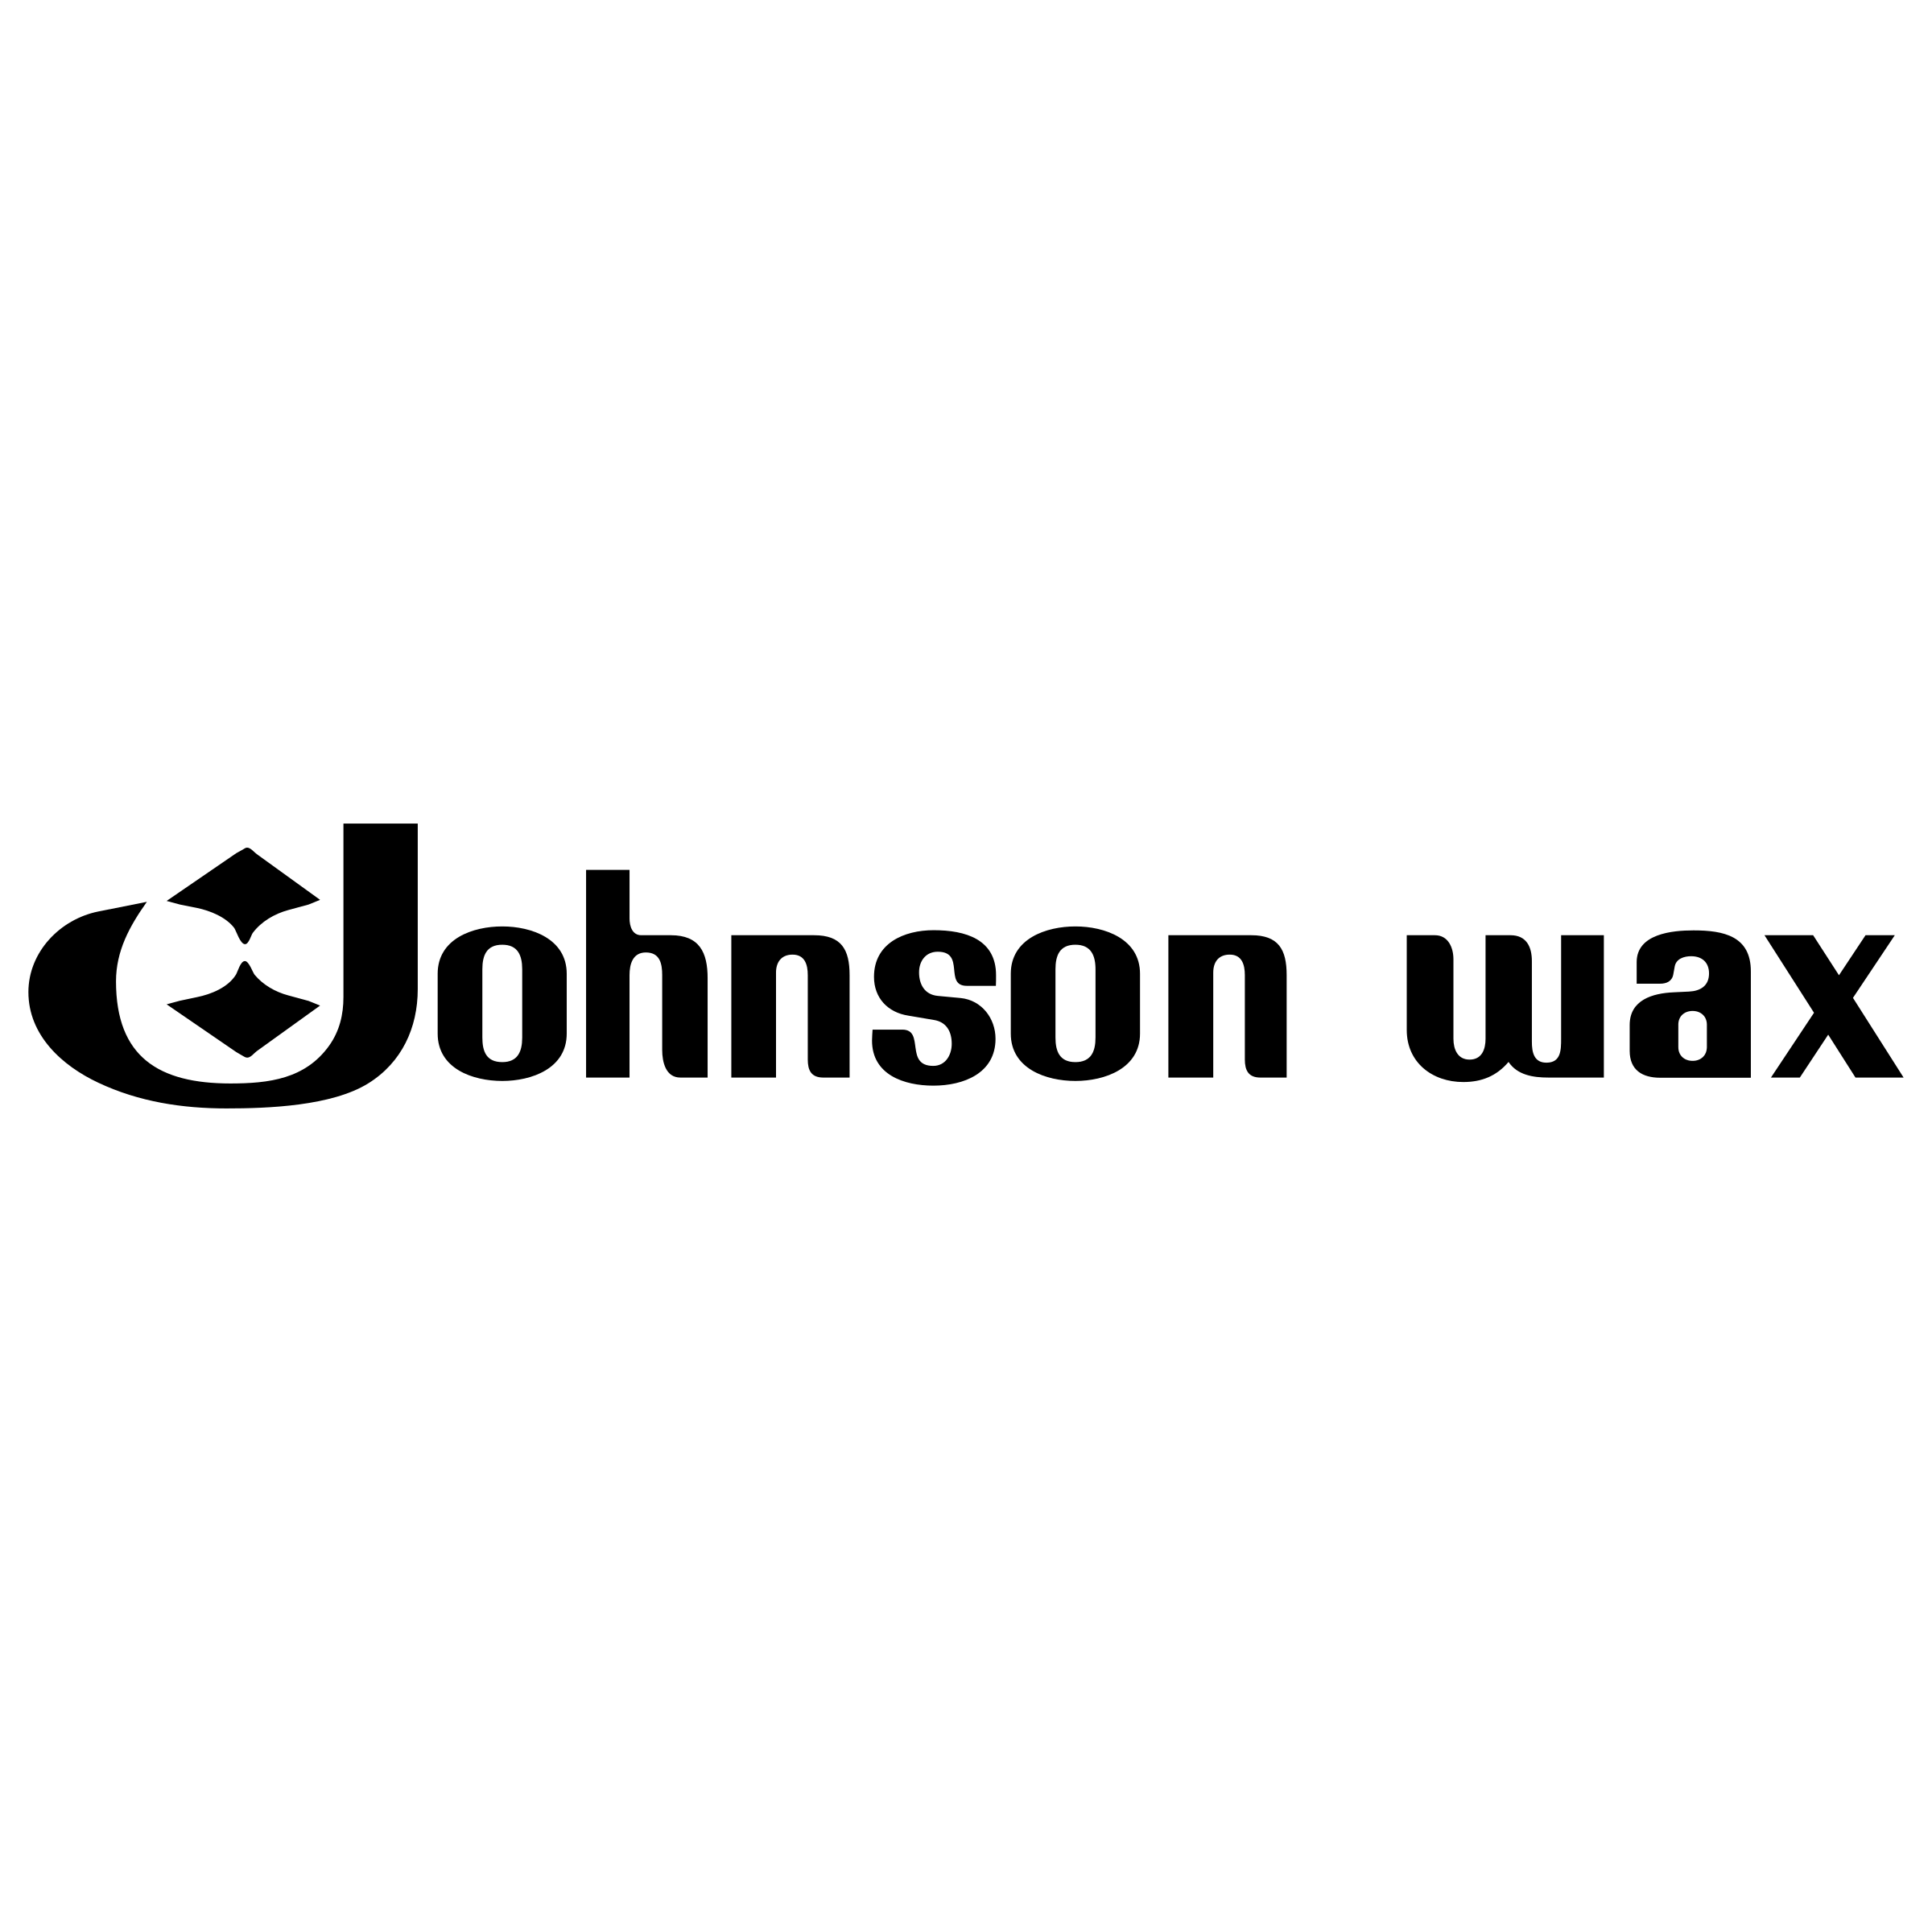 Johnson Supply Logo - Johnson Wax Logo PNG Transparent & SVG Vector - Freebie Supply